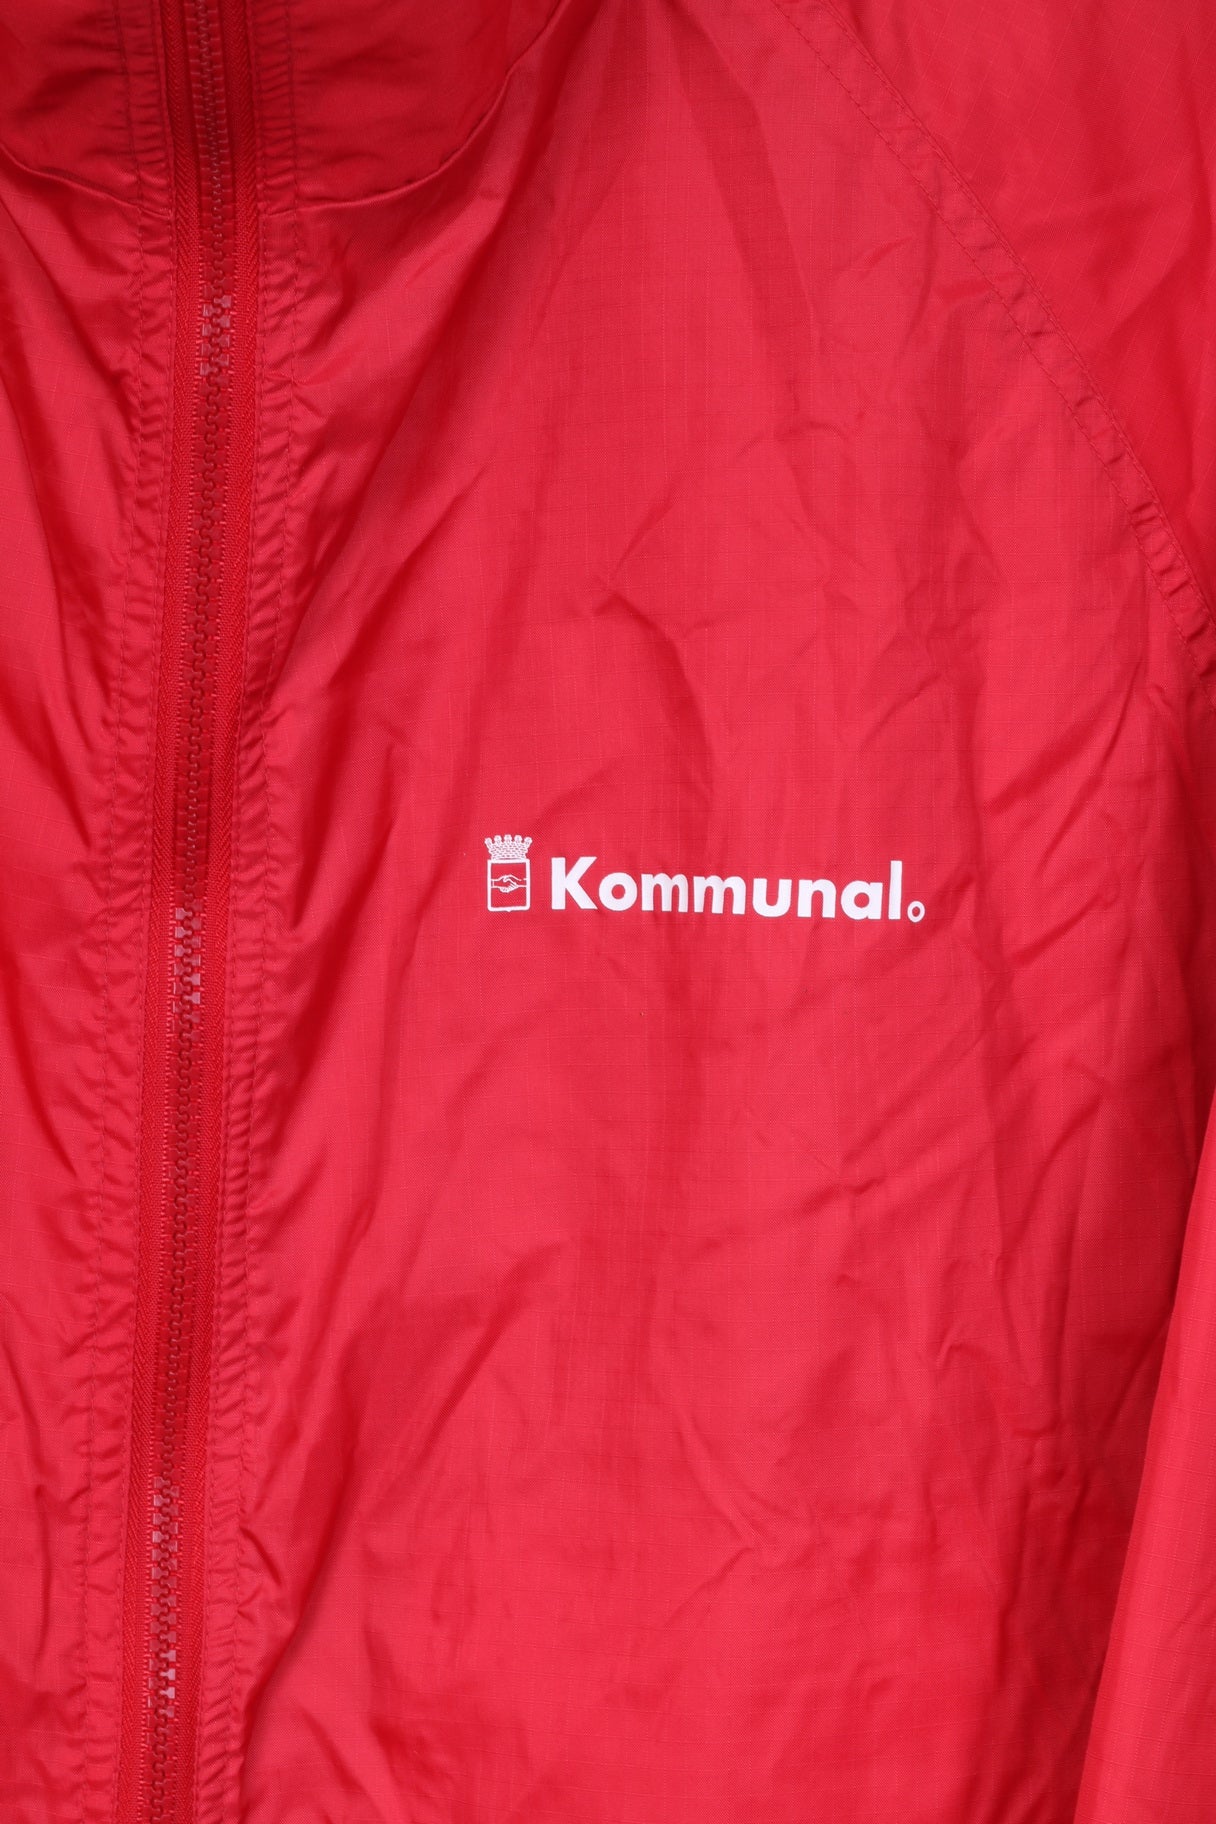 Jingham Kommunal Mens XL Jacket Full Zipper Red Nylon Waterproof